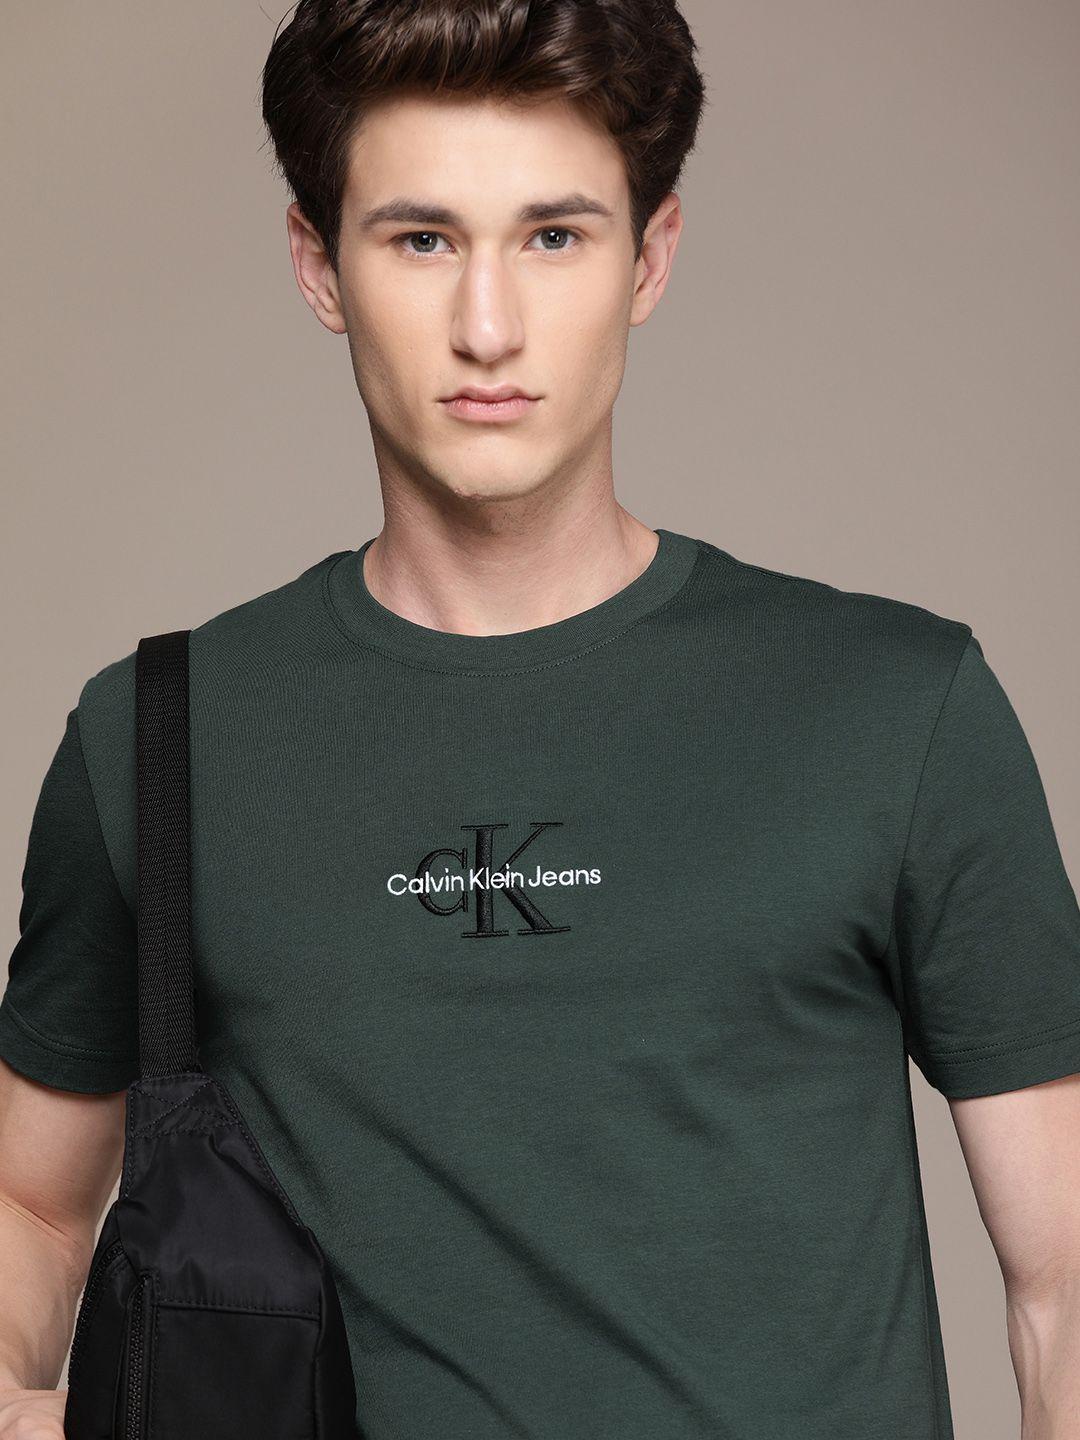 calvin klein jeans men teal green minimal brand logo embroidery pure cotton t-shirt